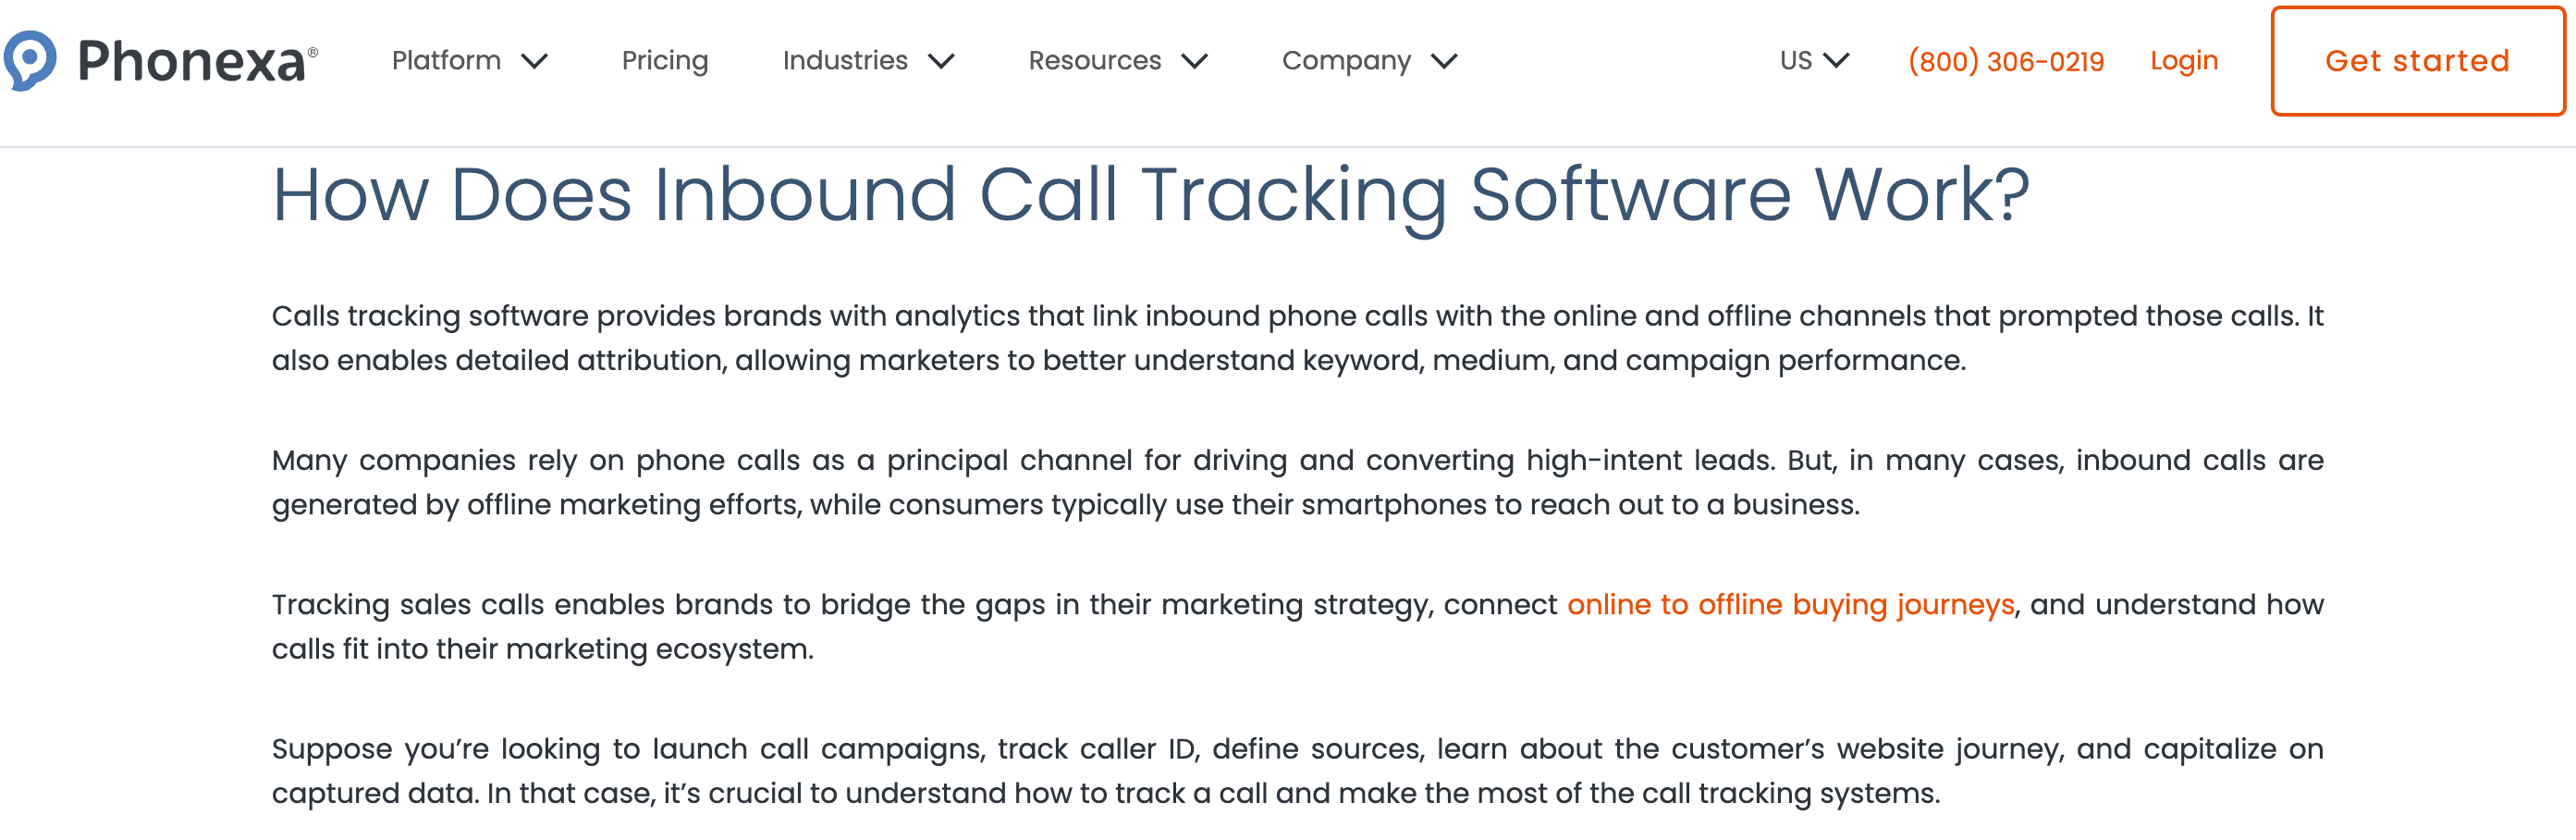 phonexa keyword attribution call tracking